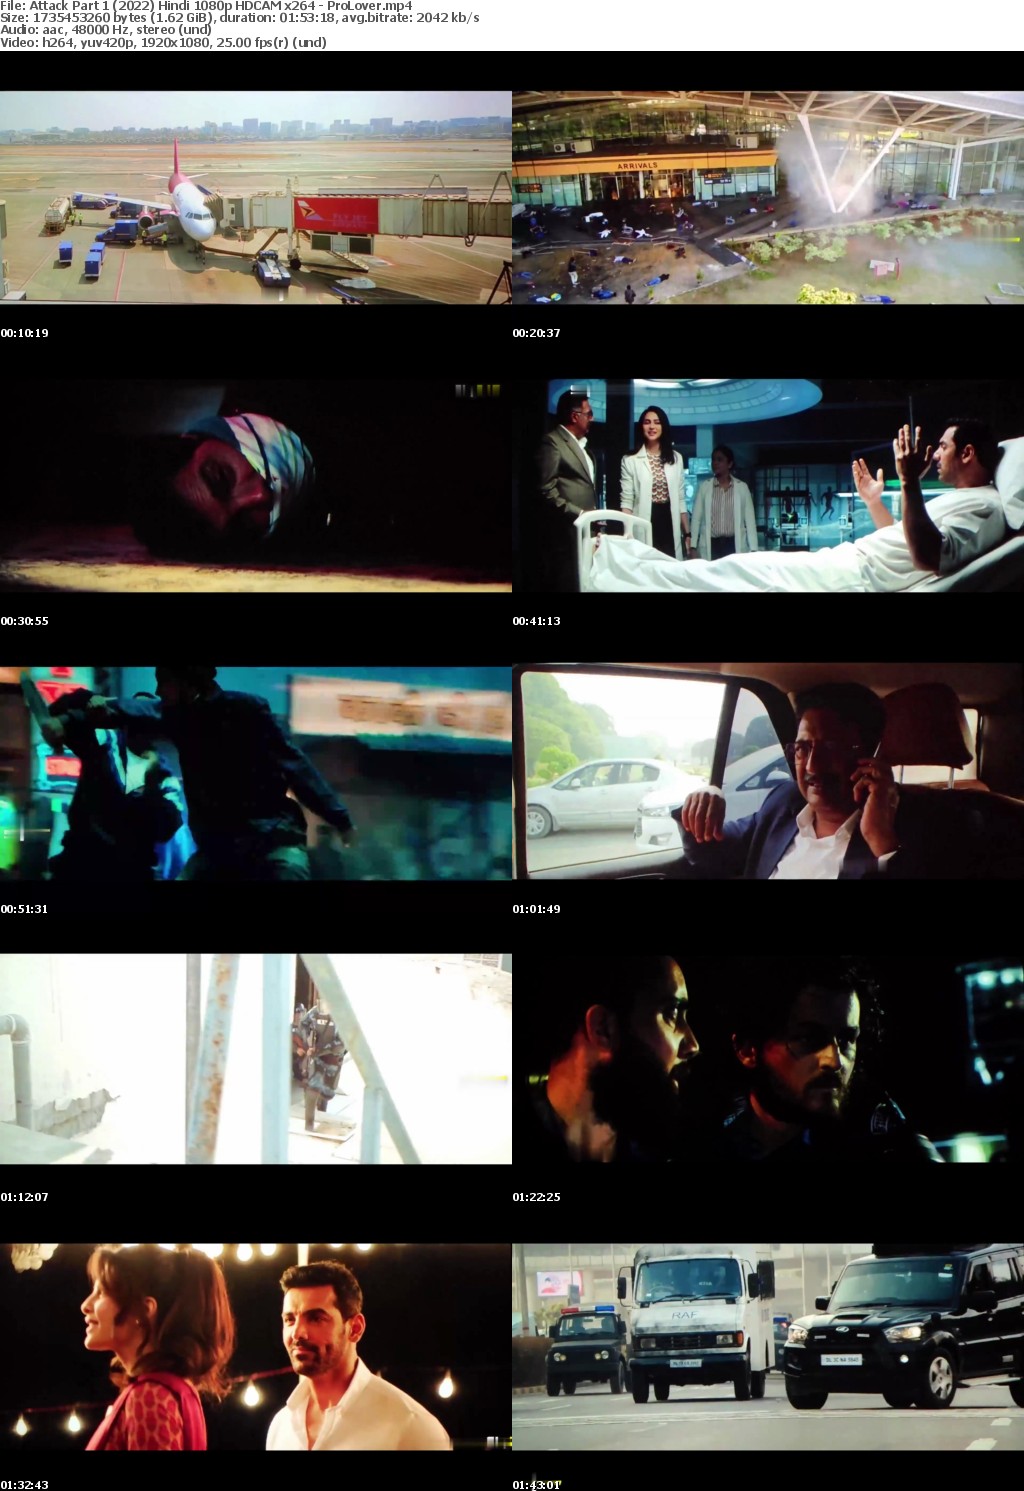 Attack Part 1 (2022) Hindi 1080p HDCAM x264 - ProLover